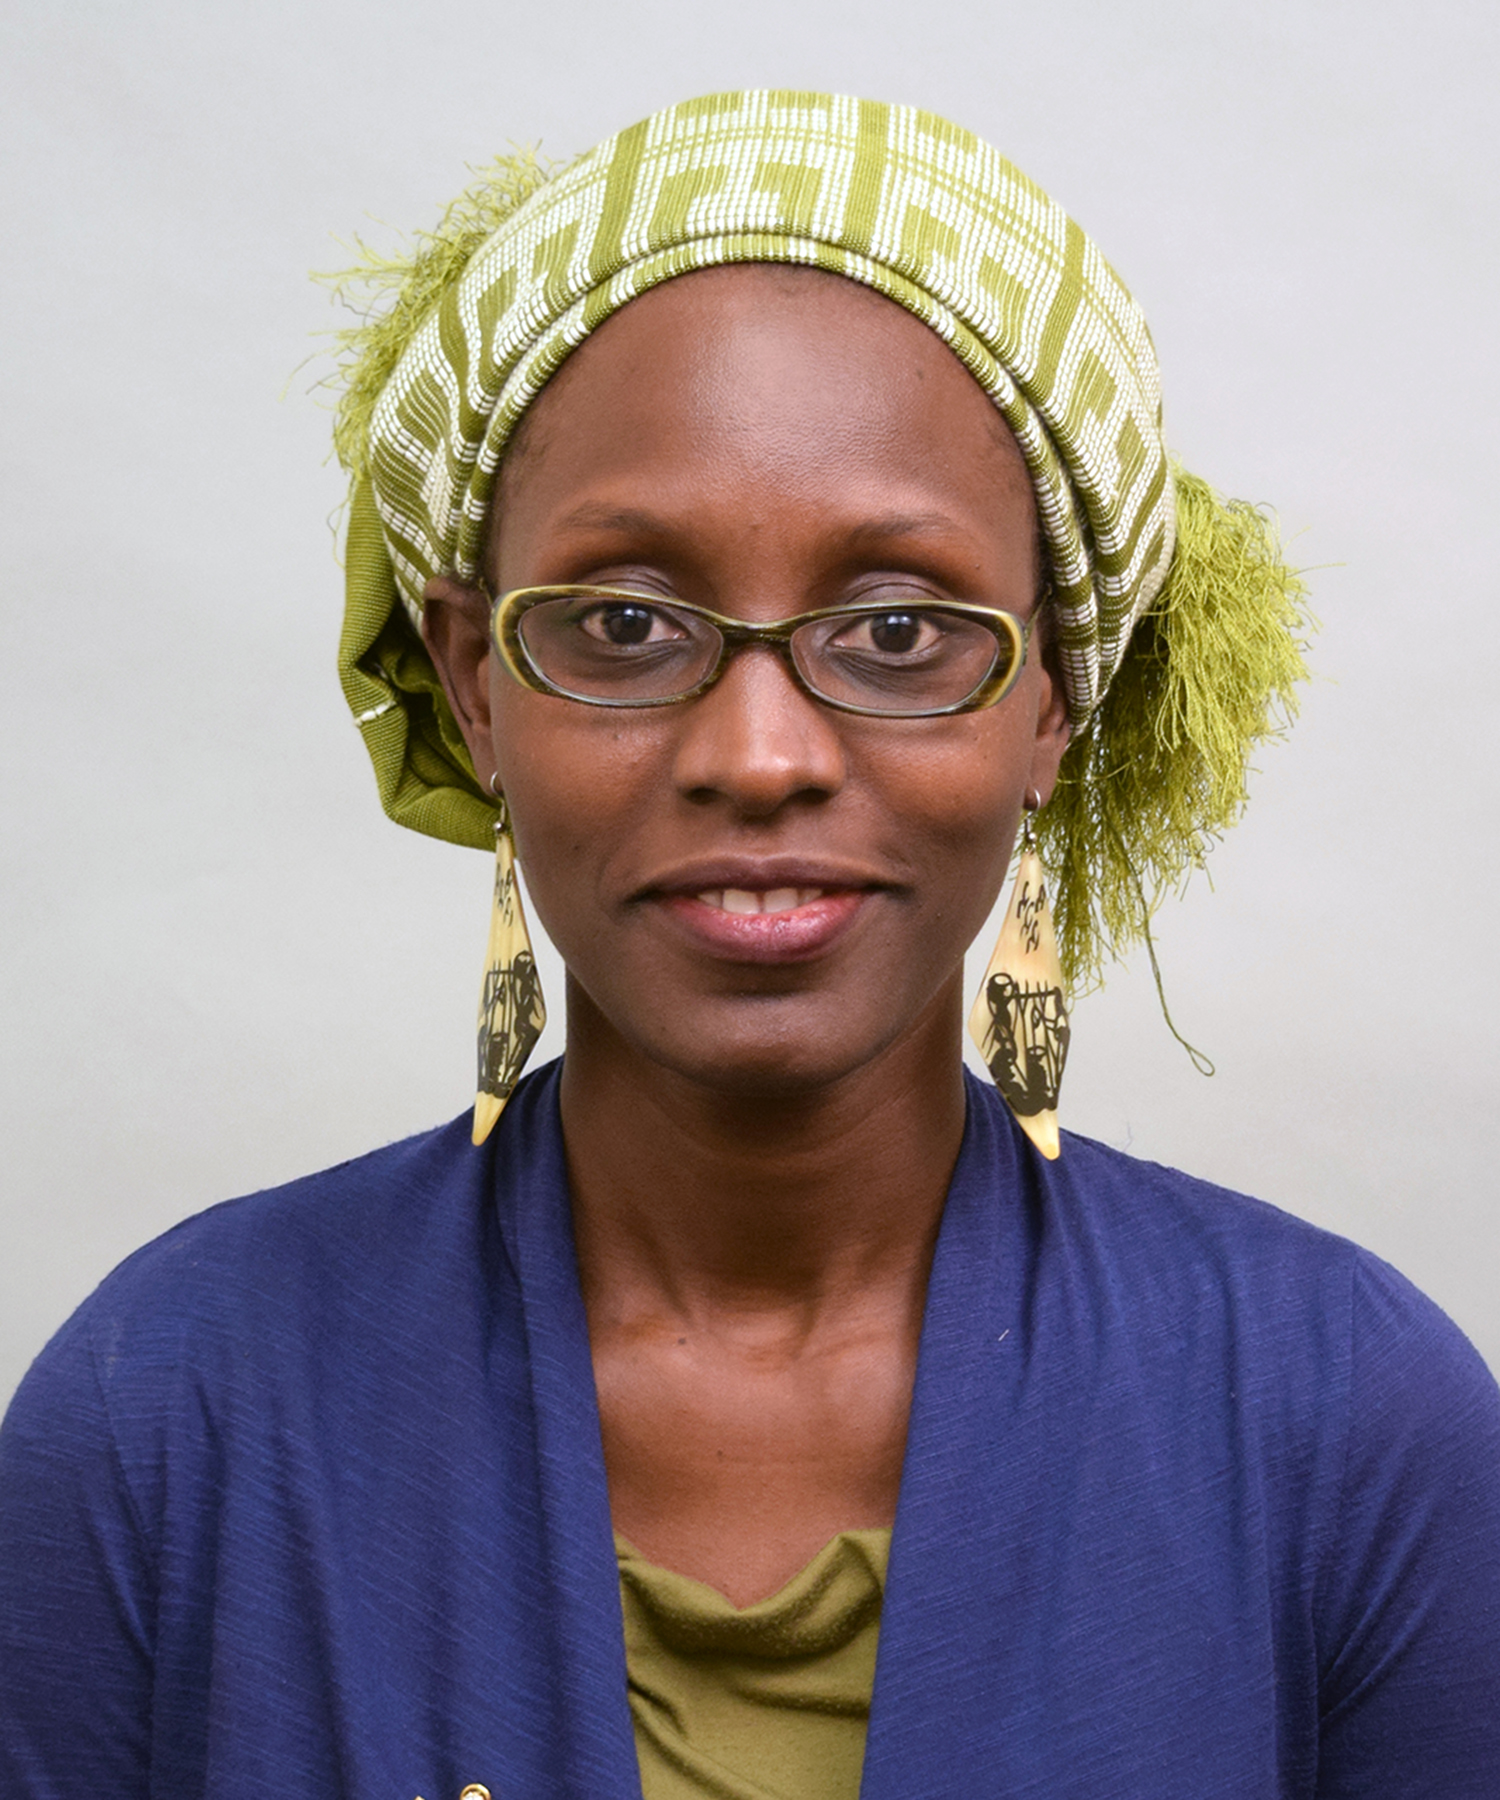 Head and shoulders photo of smiling Omonyele Adjognon